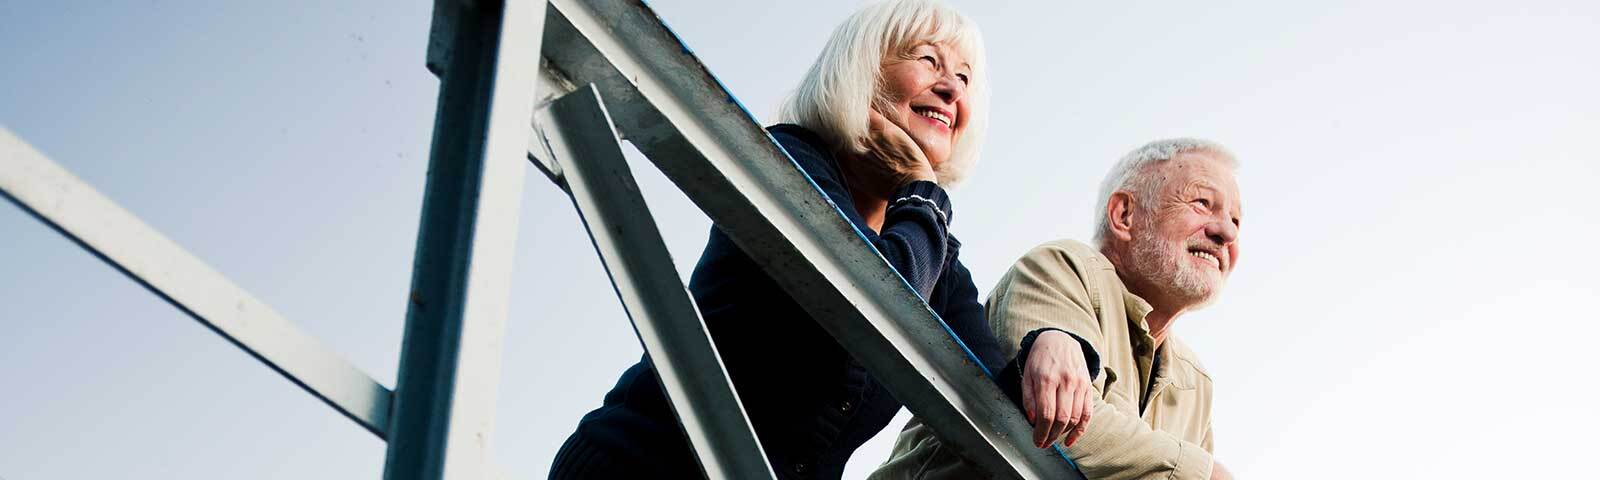 Älteres Ehepaar schaut über die Reling: Schwindel im Alter